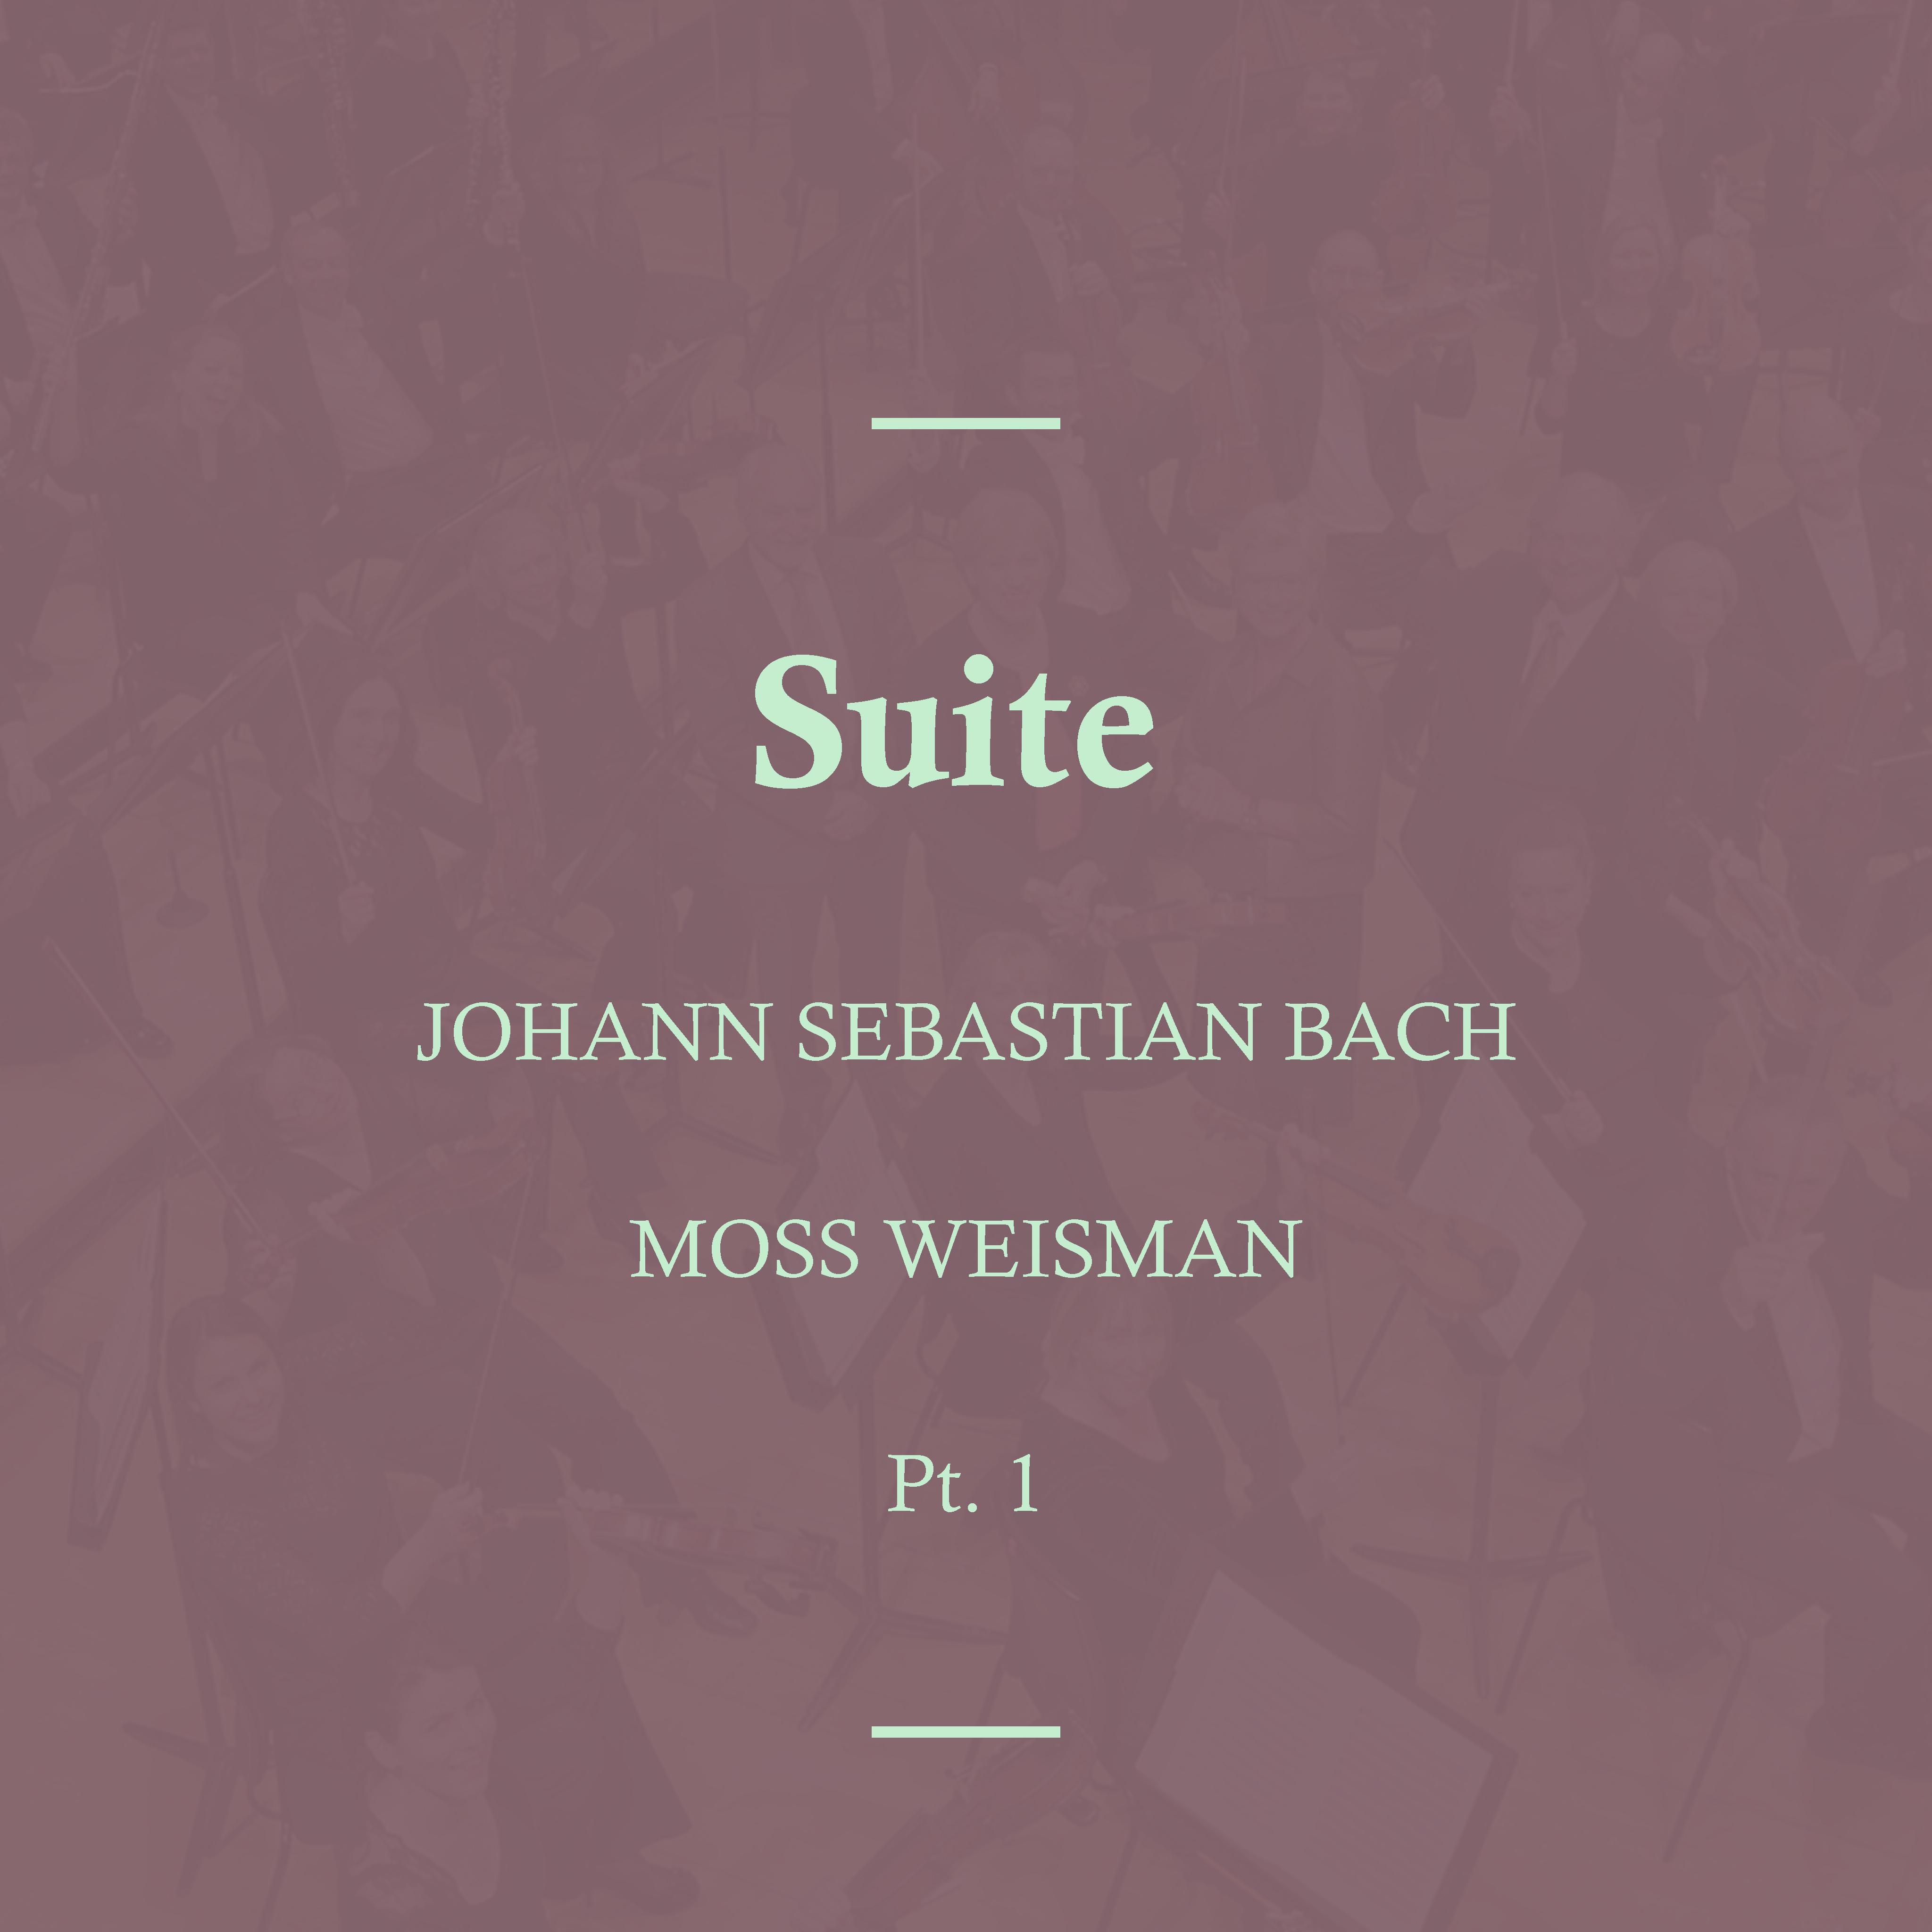 Suite in C Minor, BWV. 997: I. Prelude